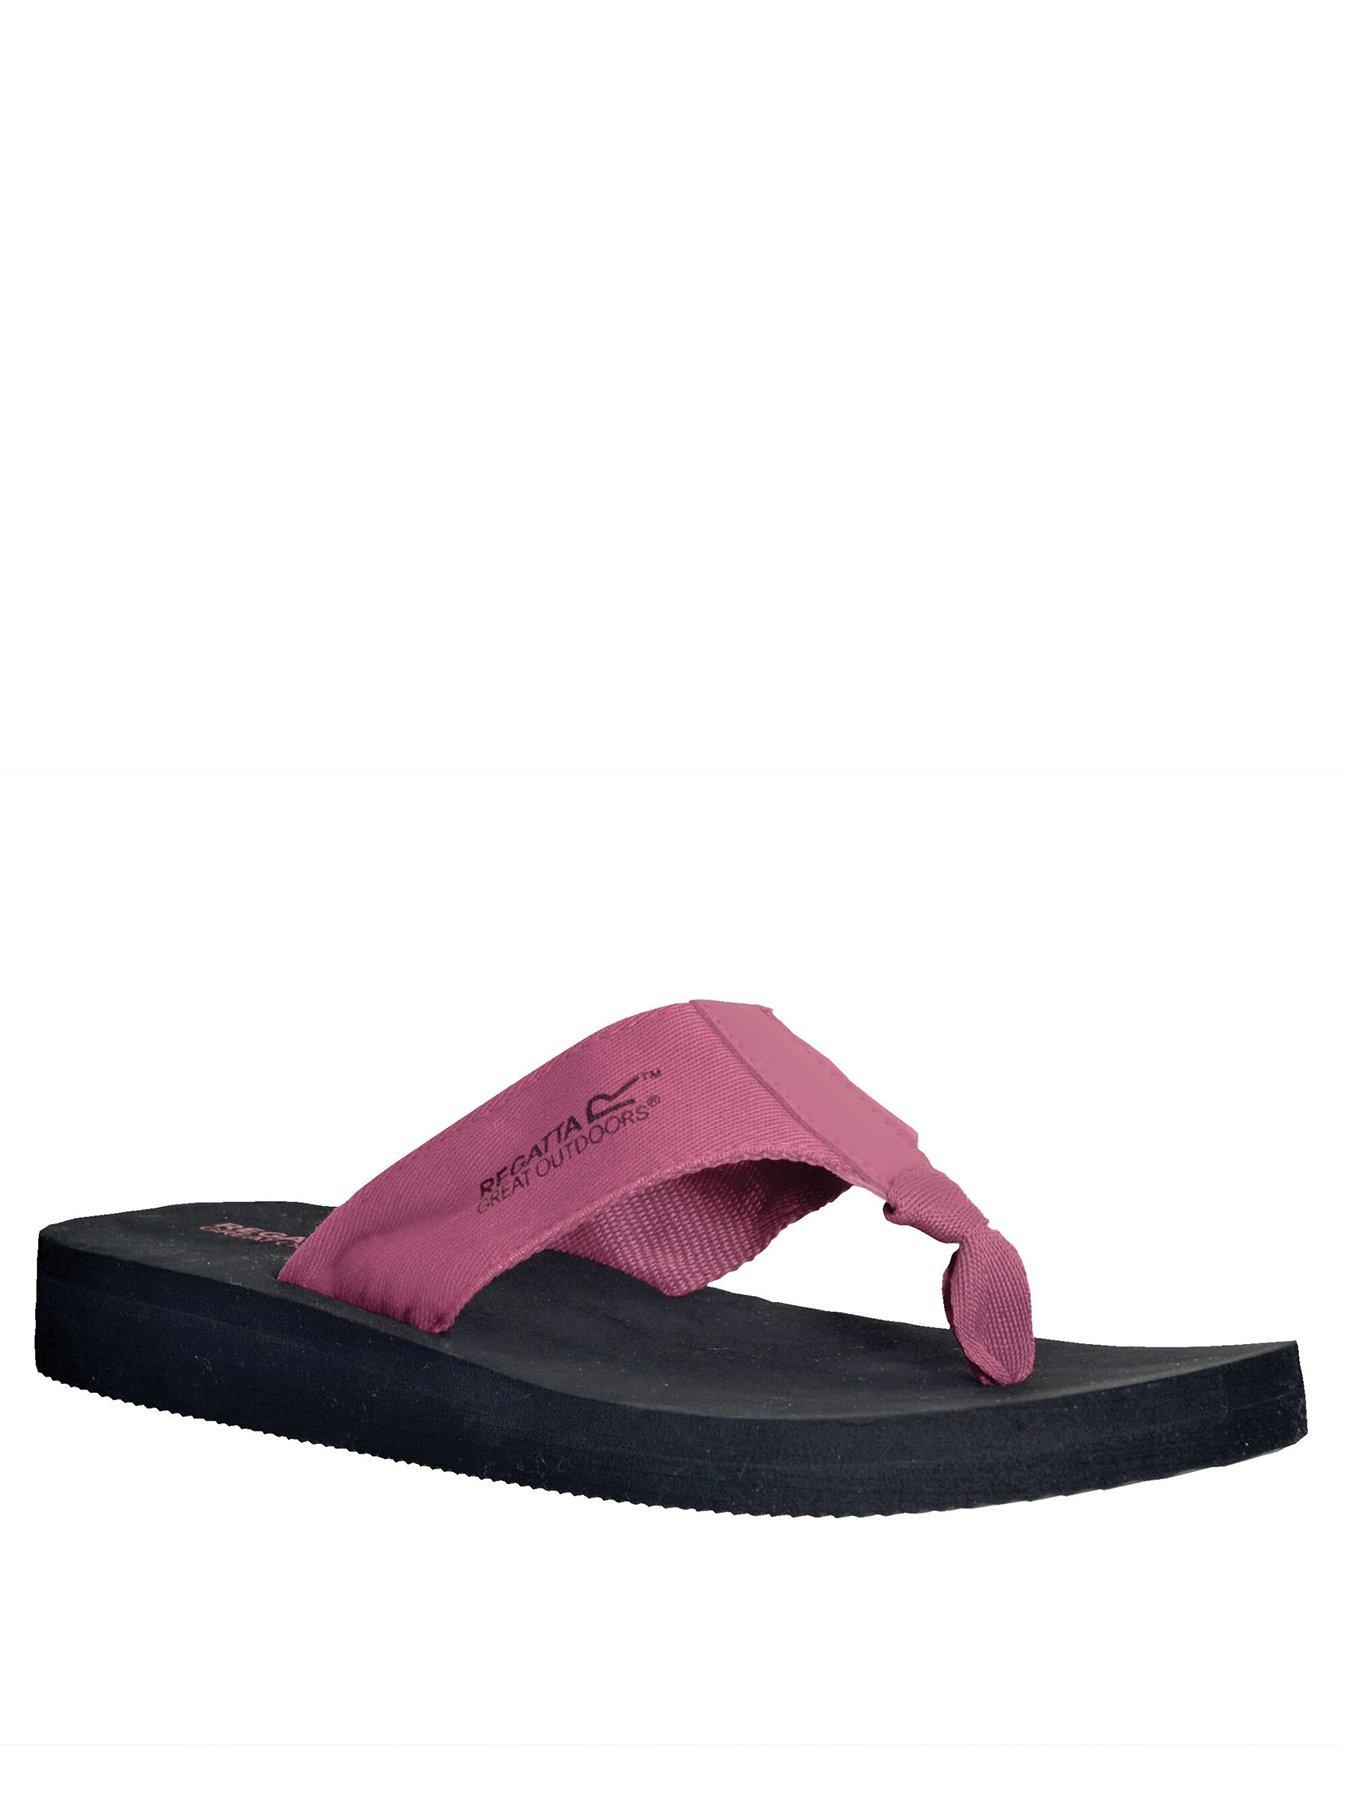 Women Catarina Sandals - Black/Pink